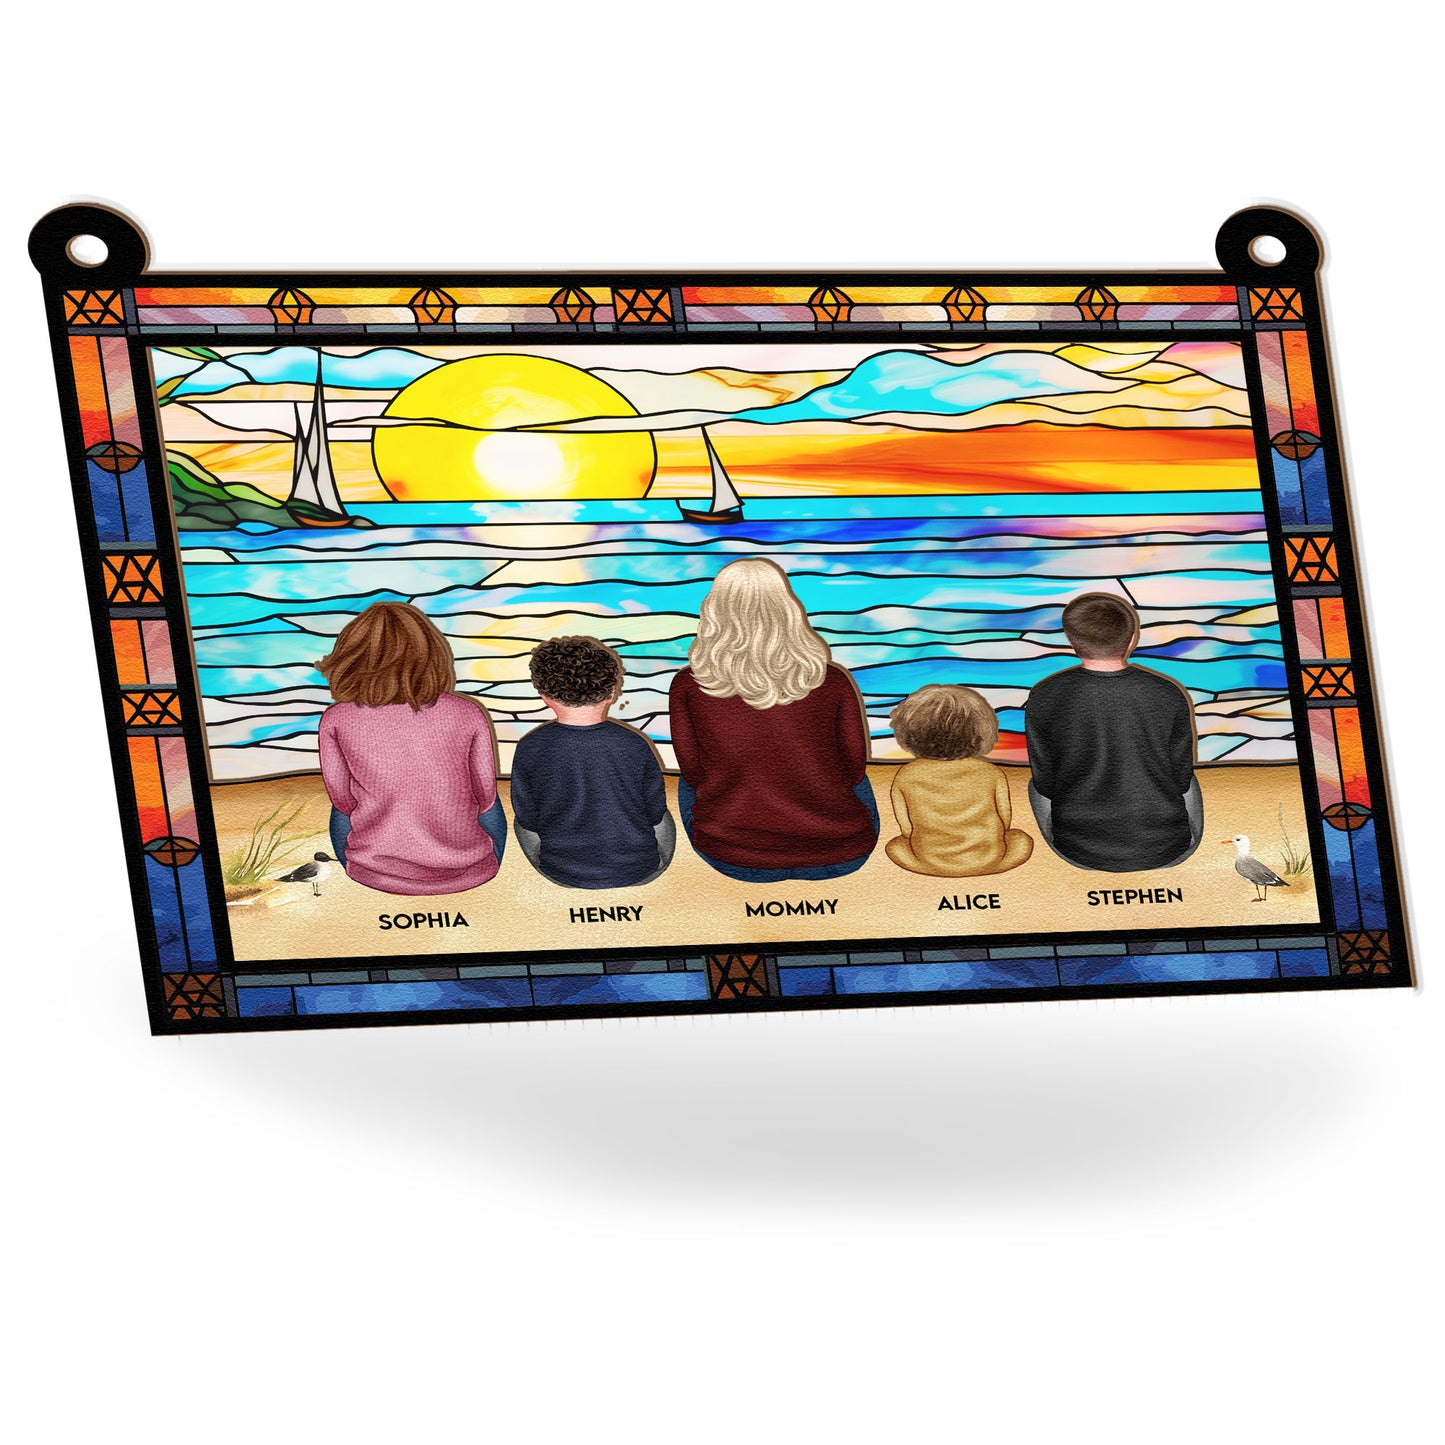 Mom & Children Sitting On The Beach - Personalized Window Hanging Suncatcher Ornament